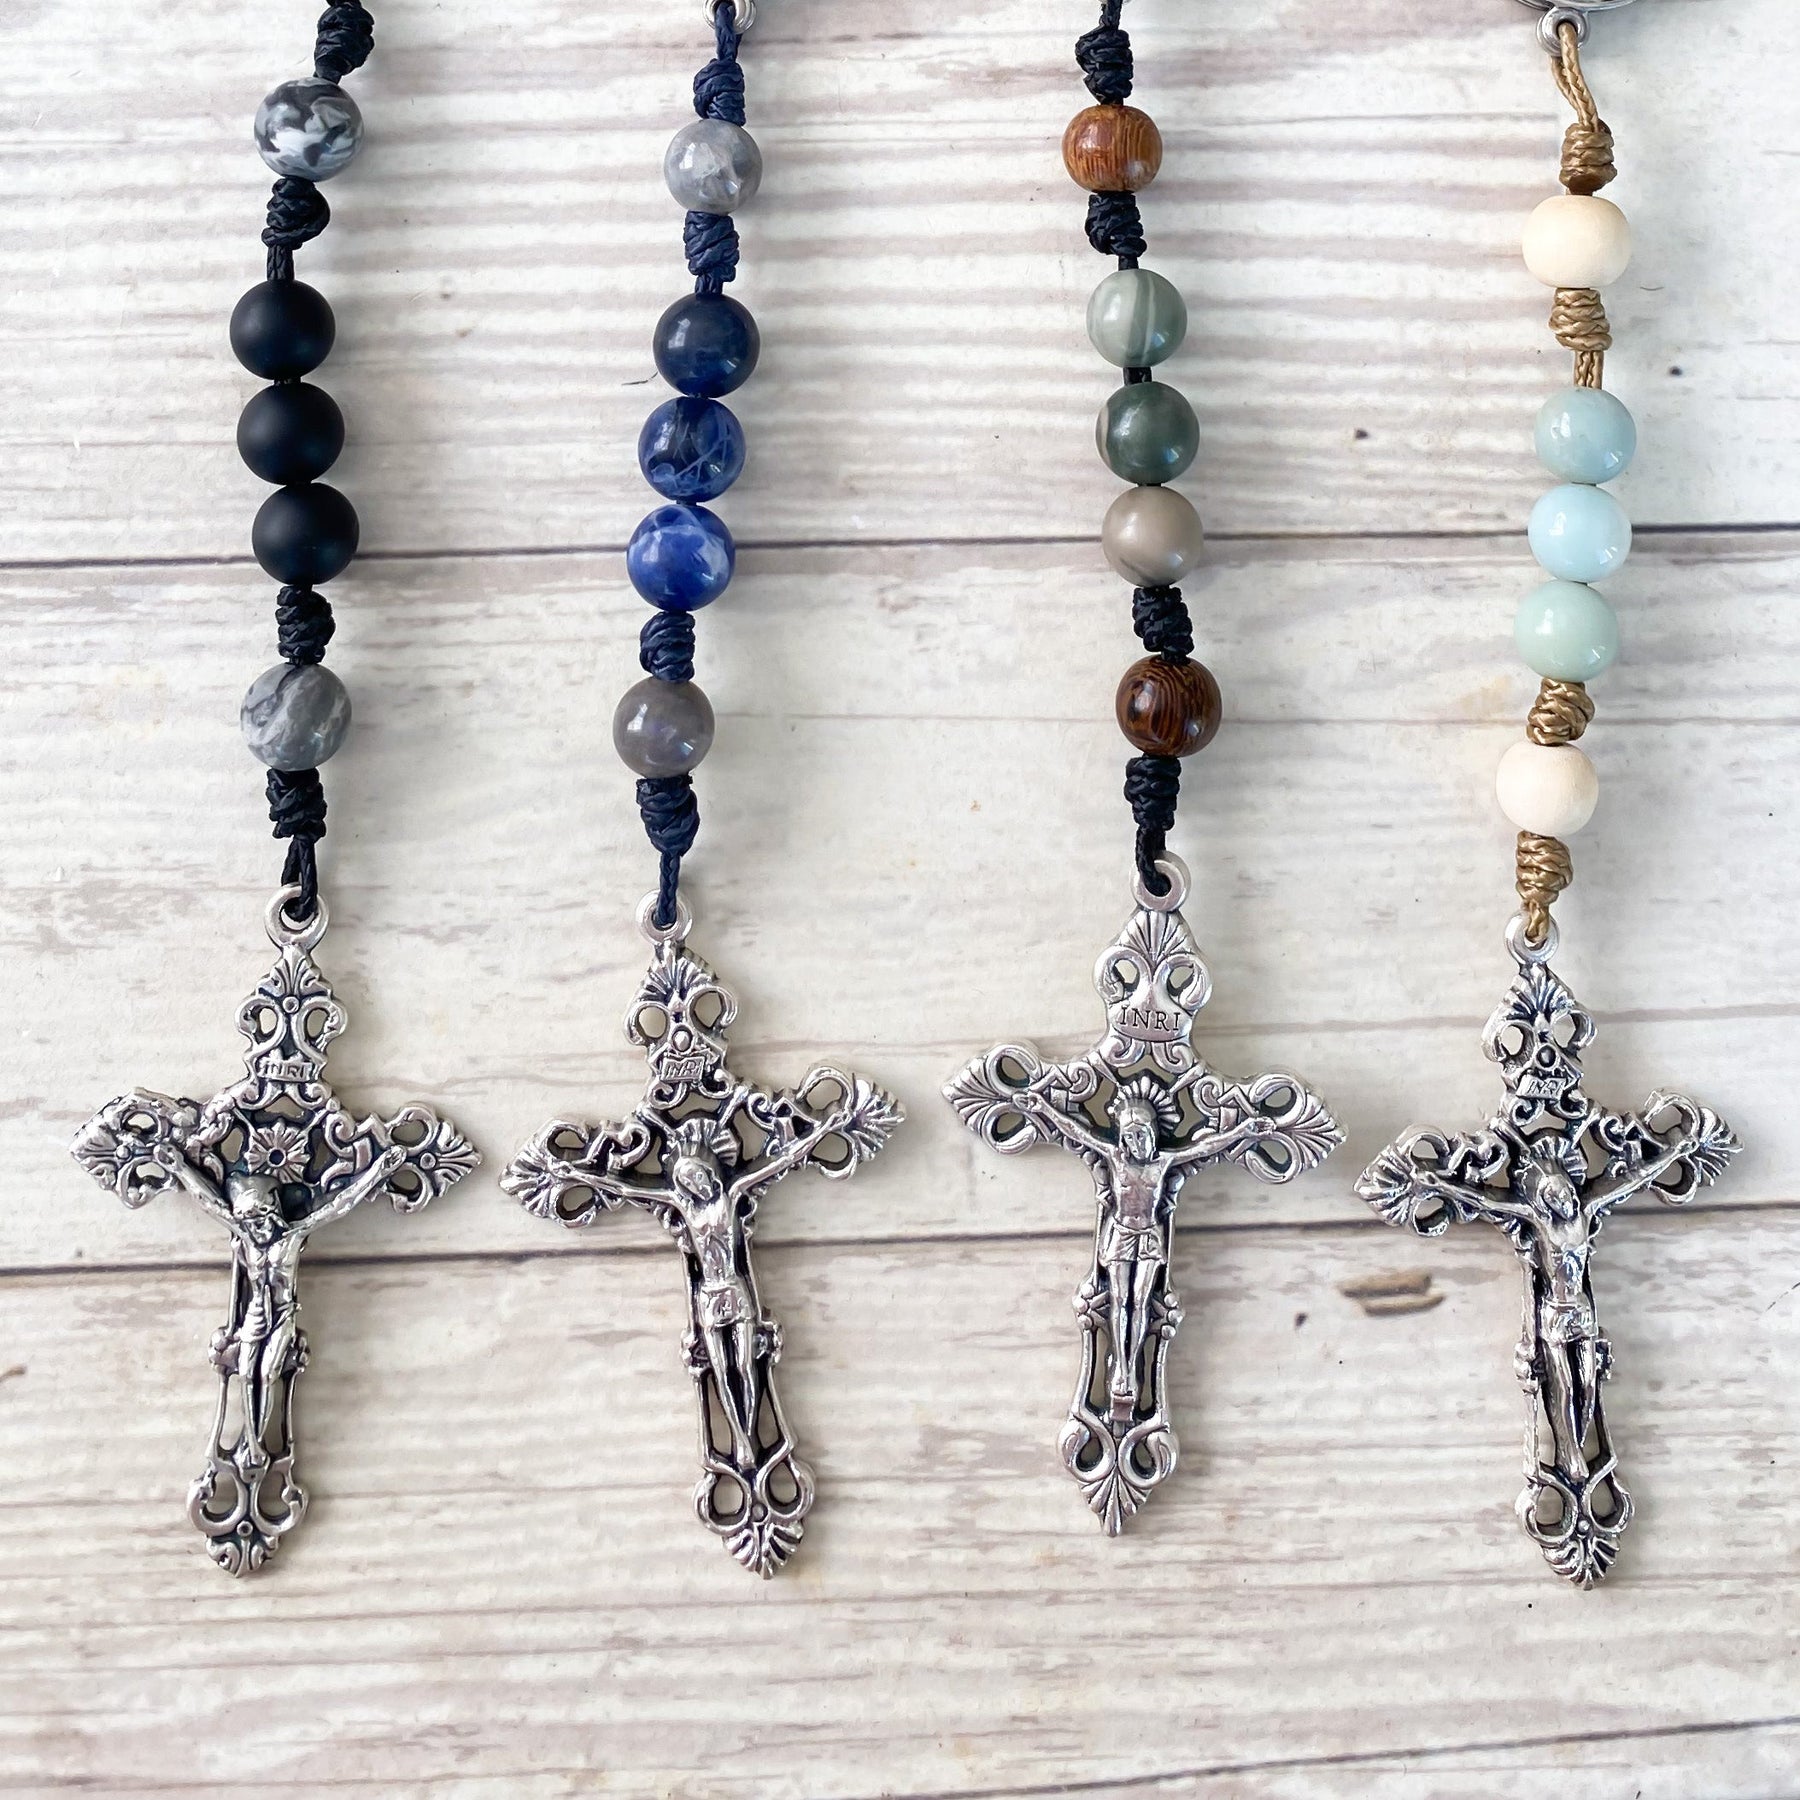 Ornate Anglican Rosary - Obsidian & Larkivite - Unspoken Elements